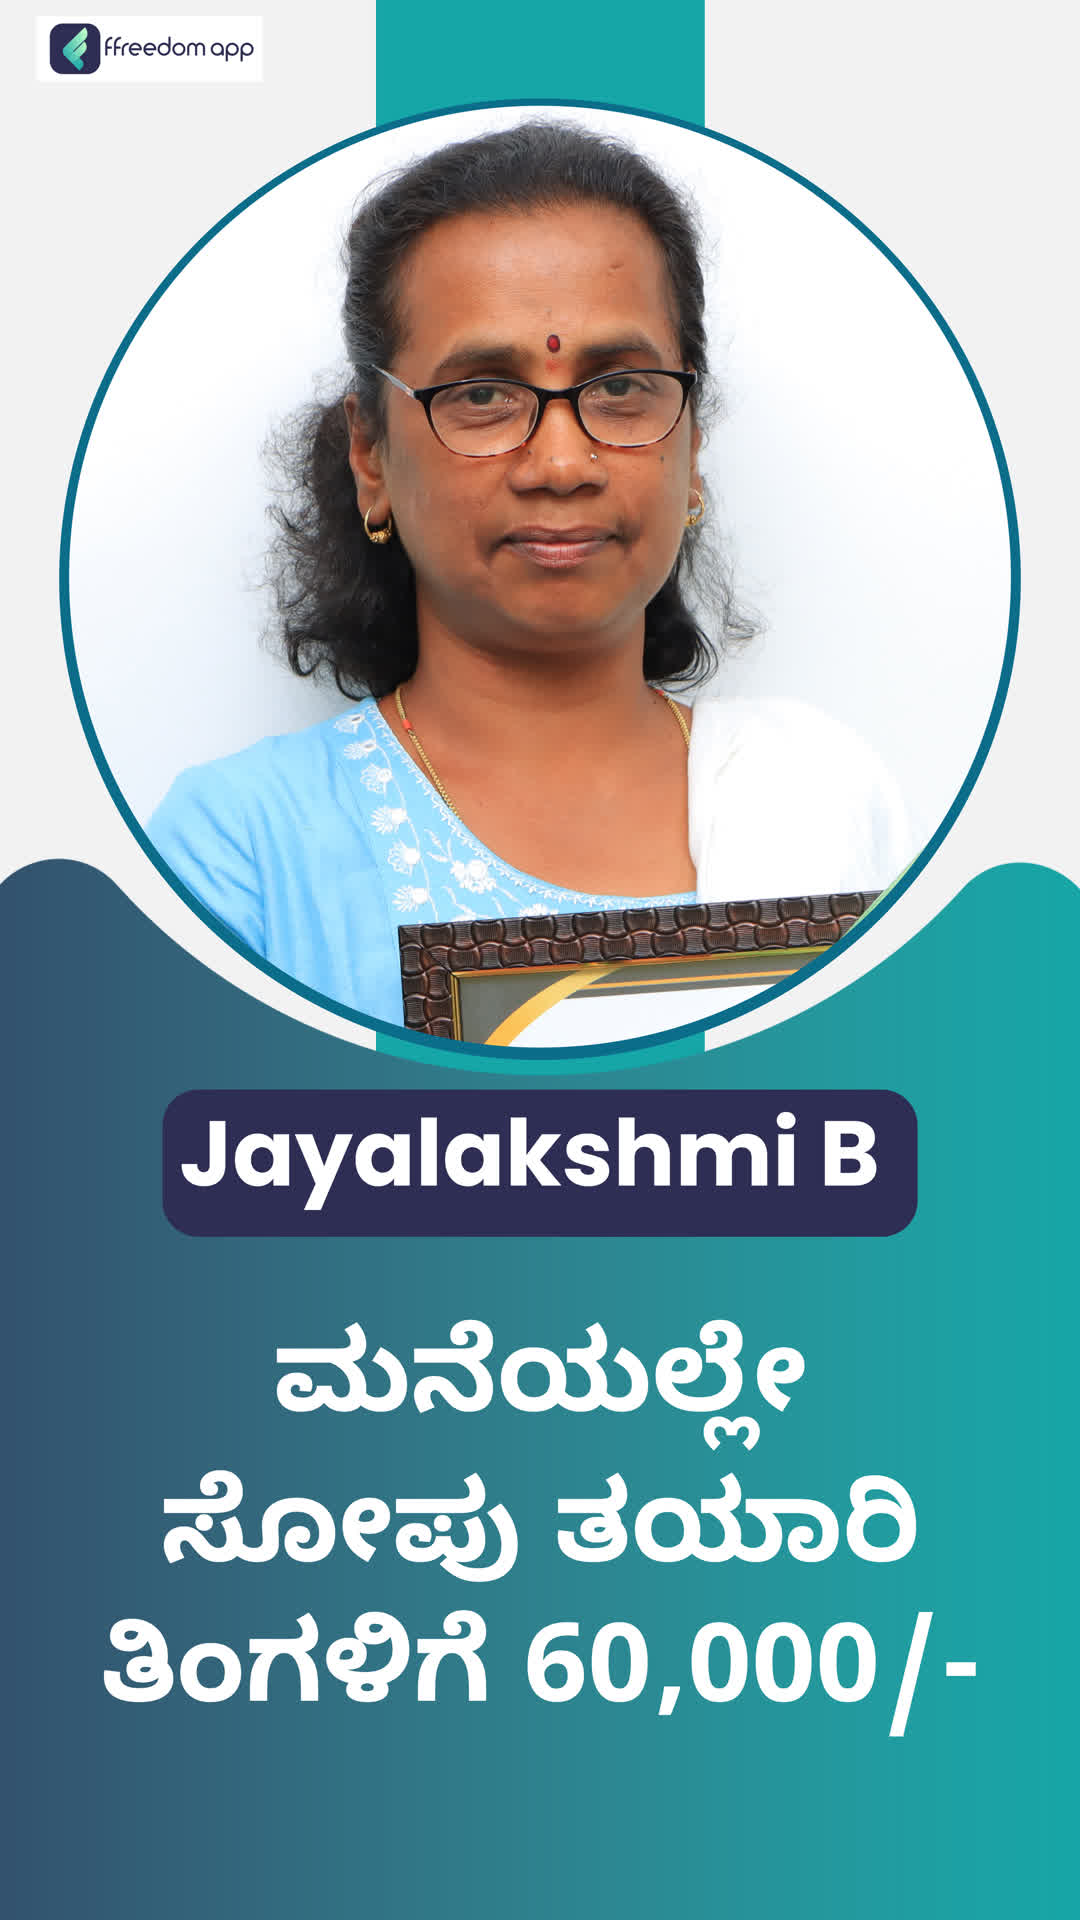 Jayalakshmi b's Honest Review of ffreedom app - Hassan ,Karnataka